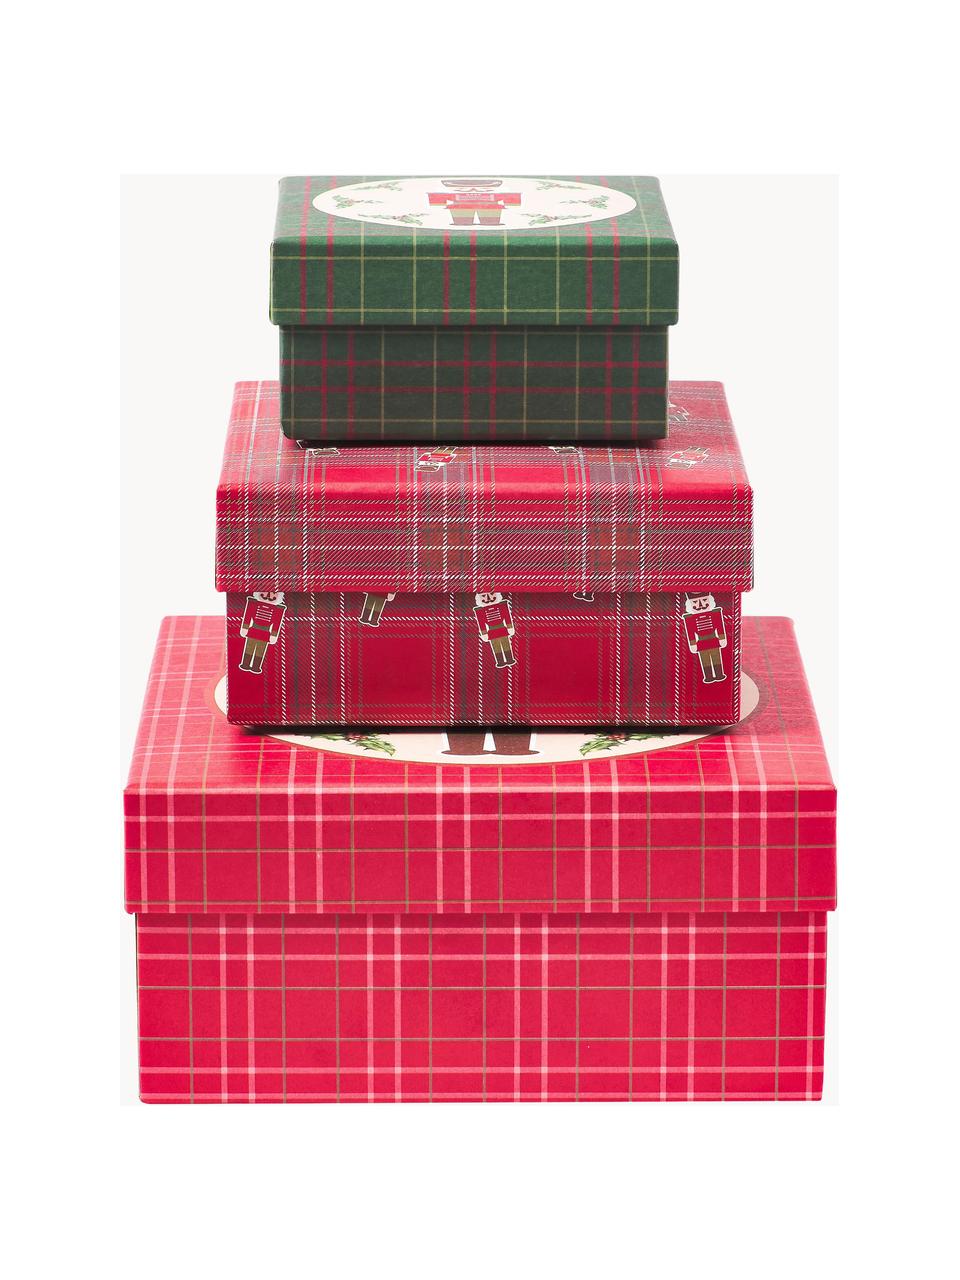 Set de cajas regalo Nussknacker, 3 uds., Papel, Rojo, verde, beige, Set de diferentes tamaños